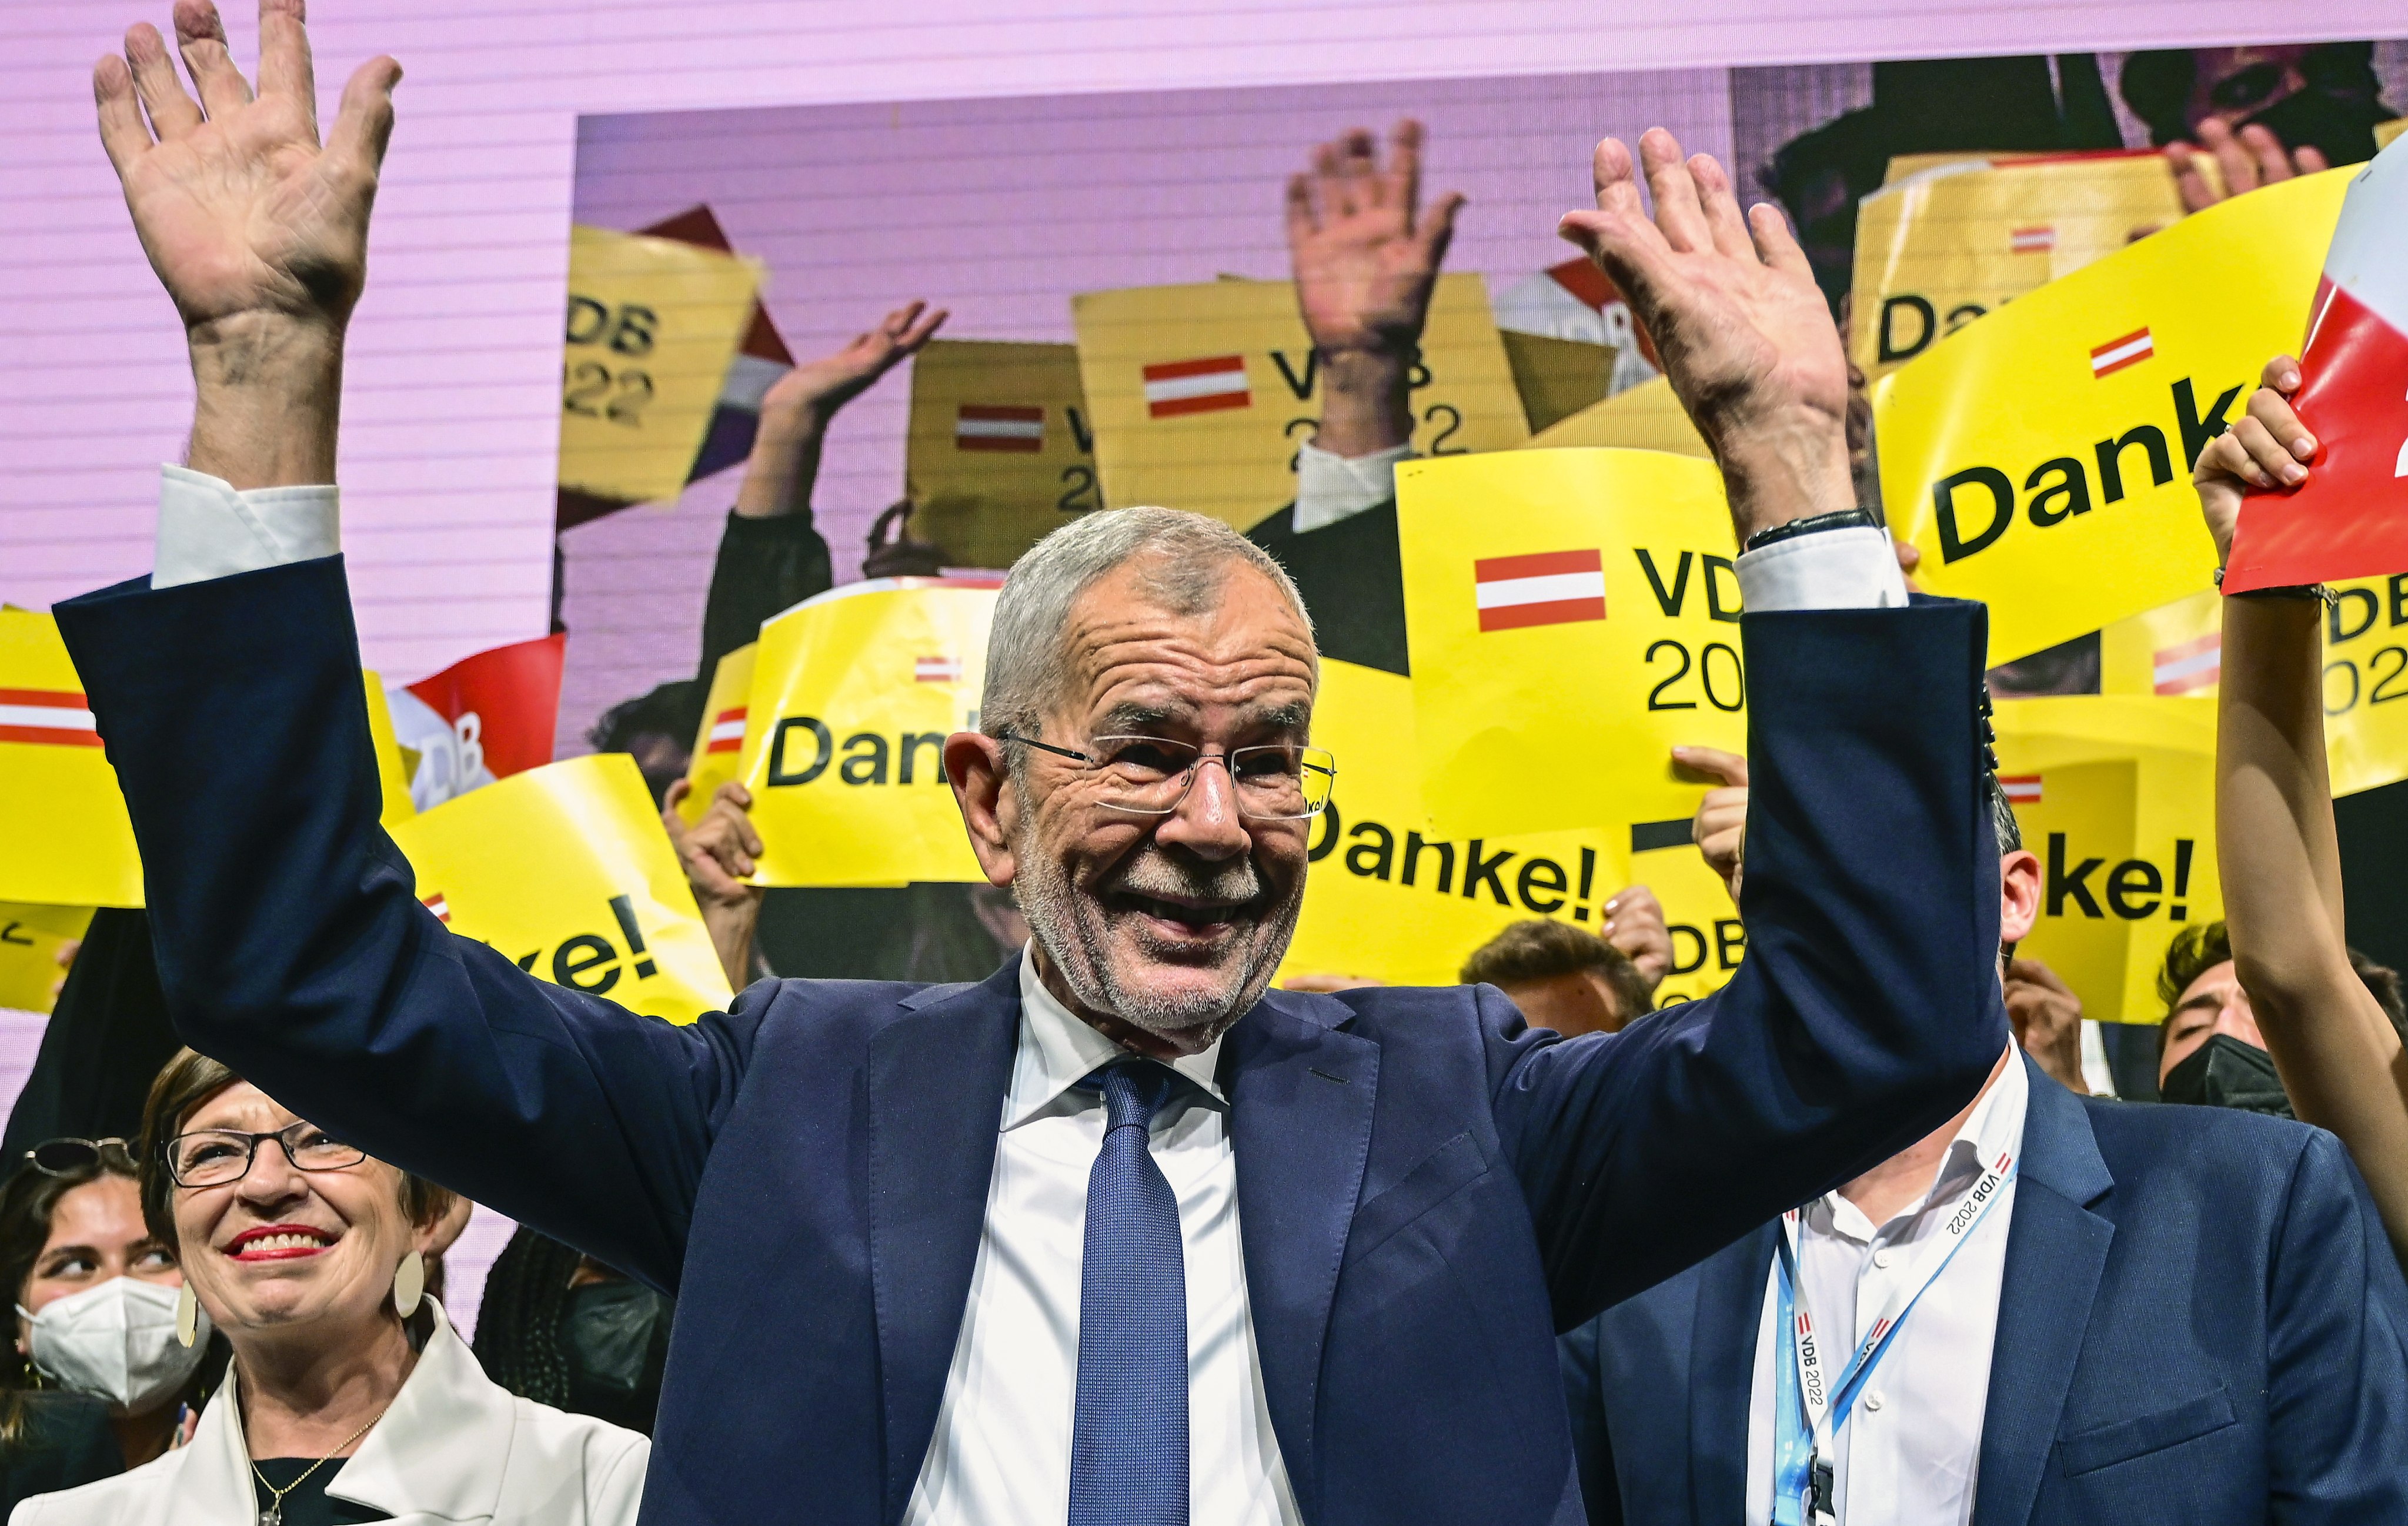 Austrian President Alexander Van der Bellen at his election party. Photo: EPA-EFE